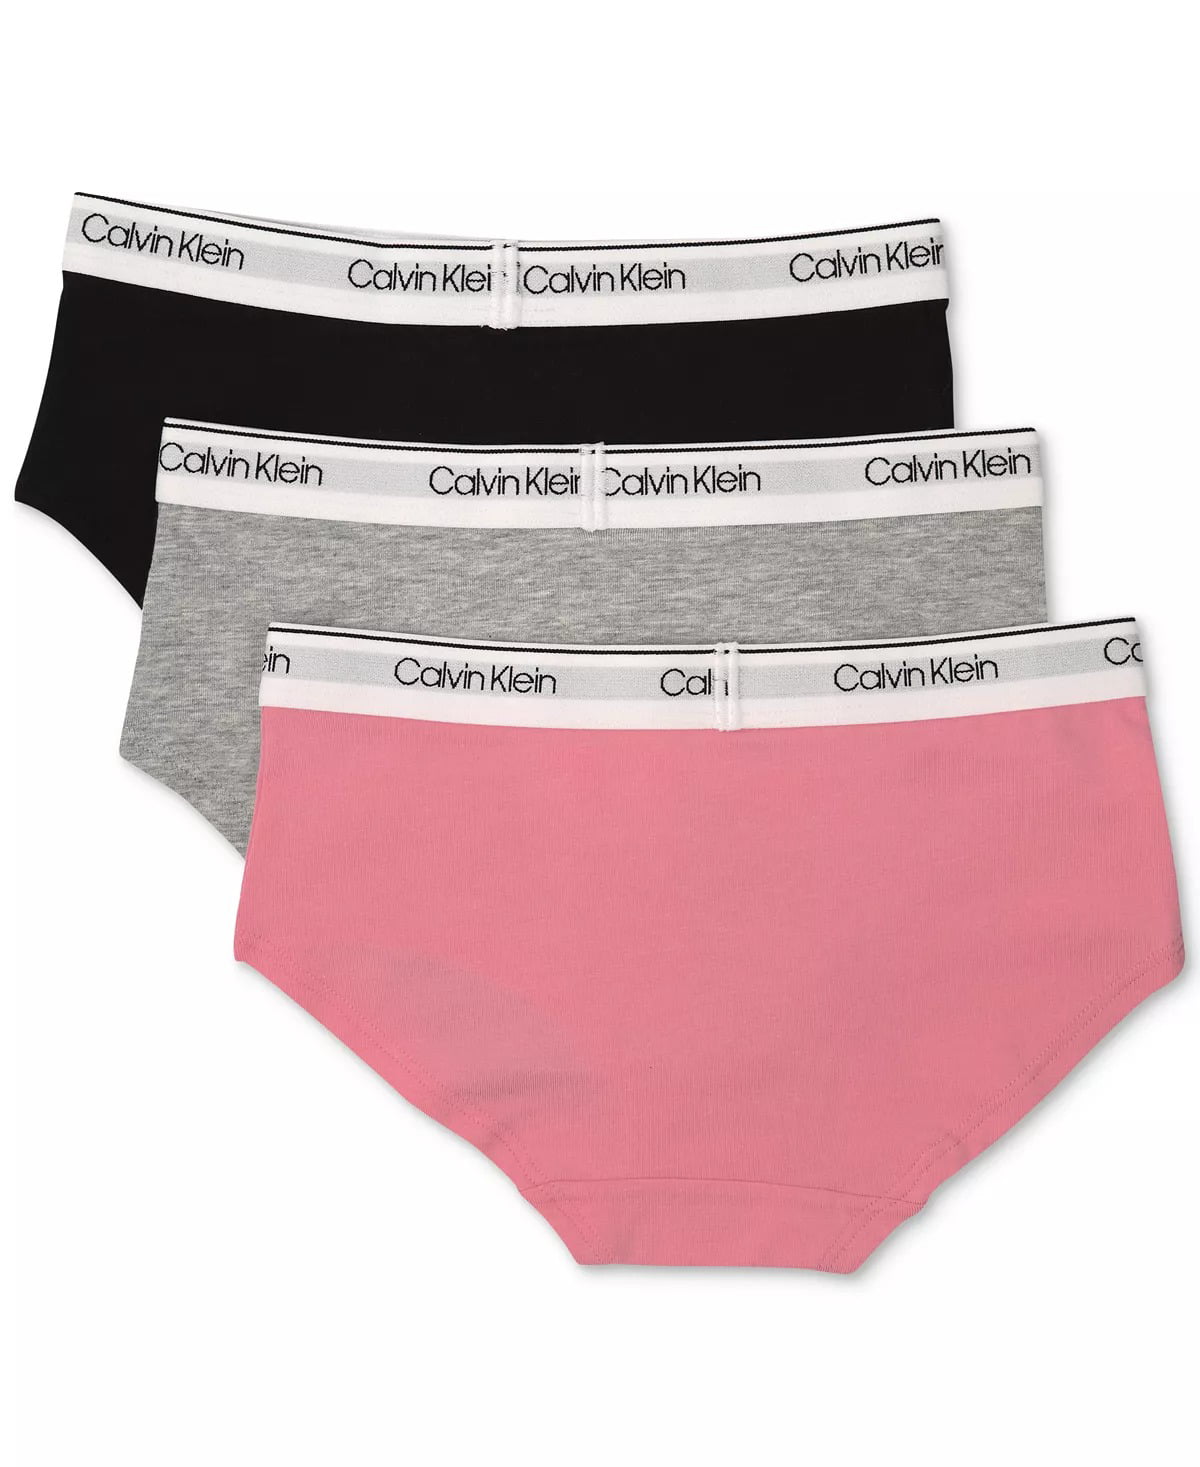 Calvin Klein 3-pack briefs BOTTOMS UP in pink/ olive/ black